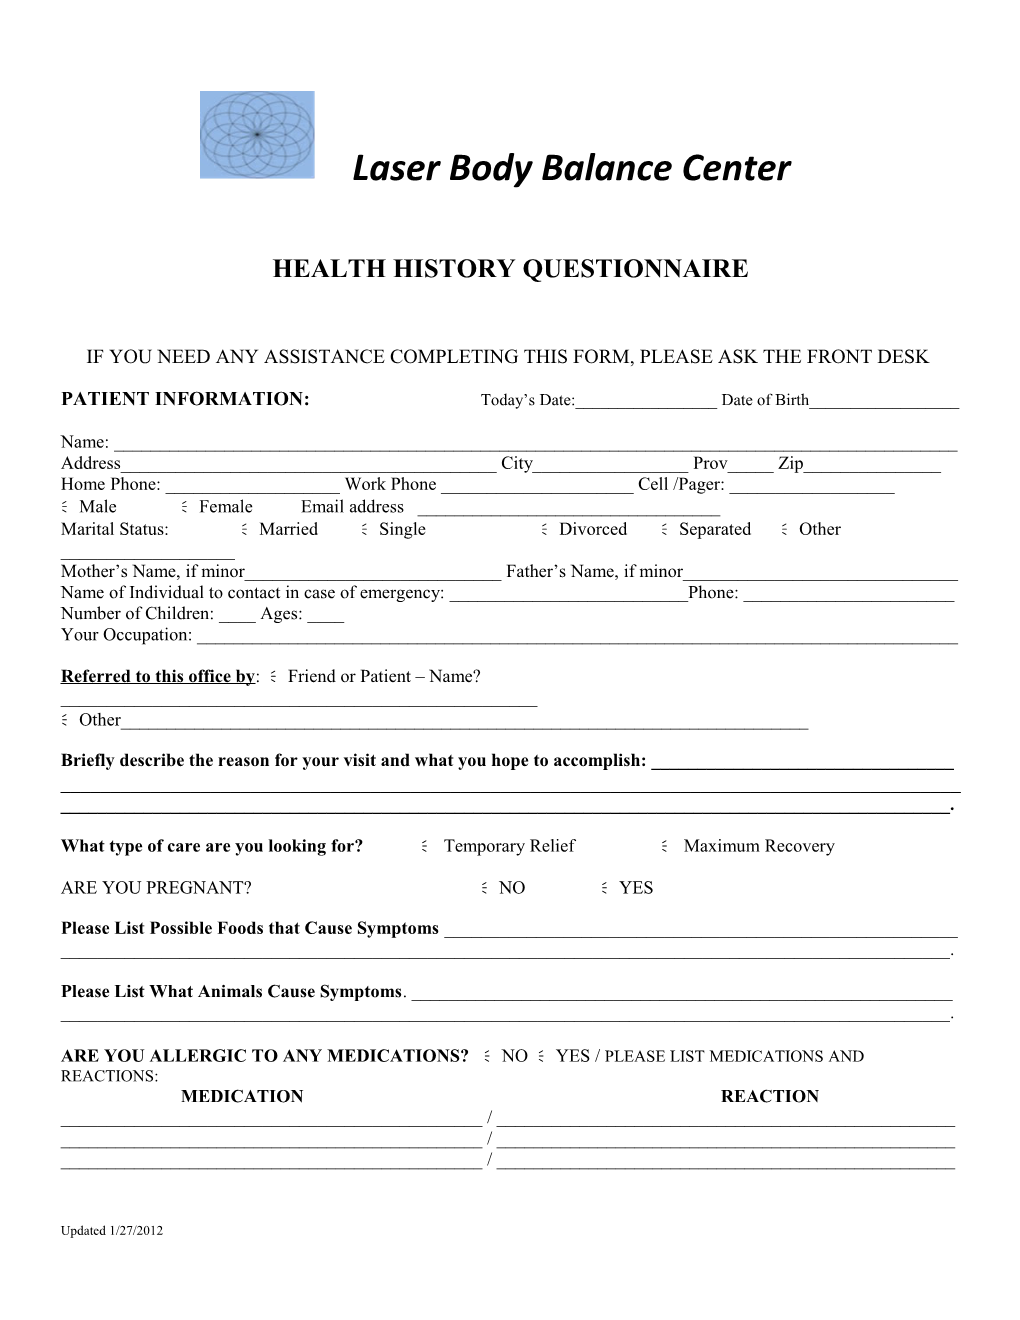 Laser Body Balance Center